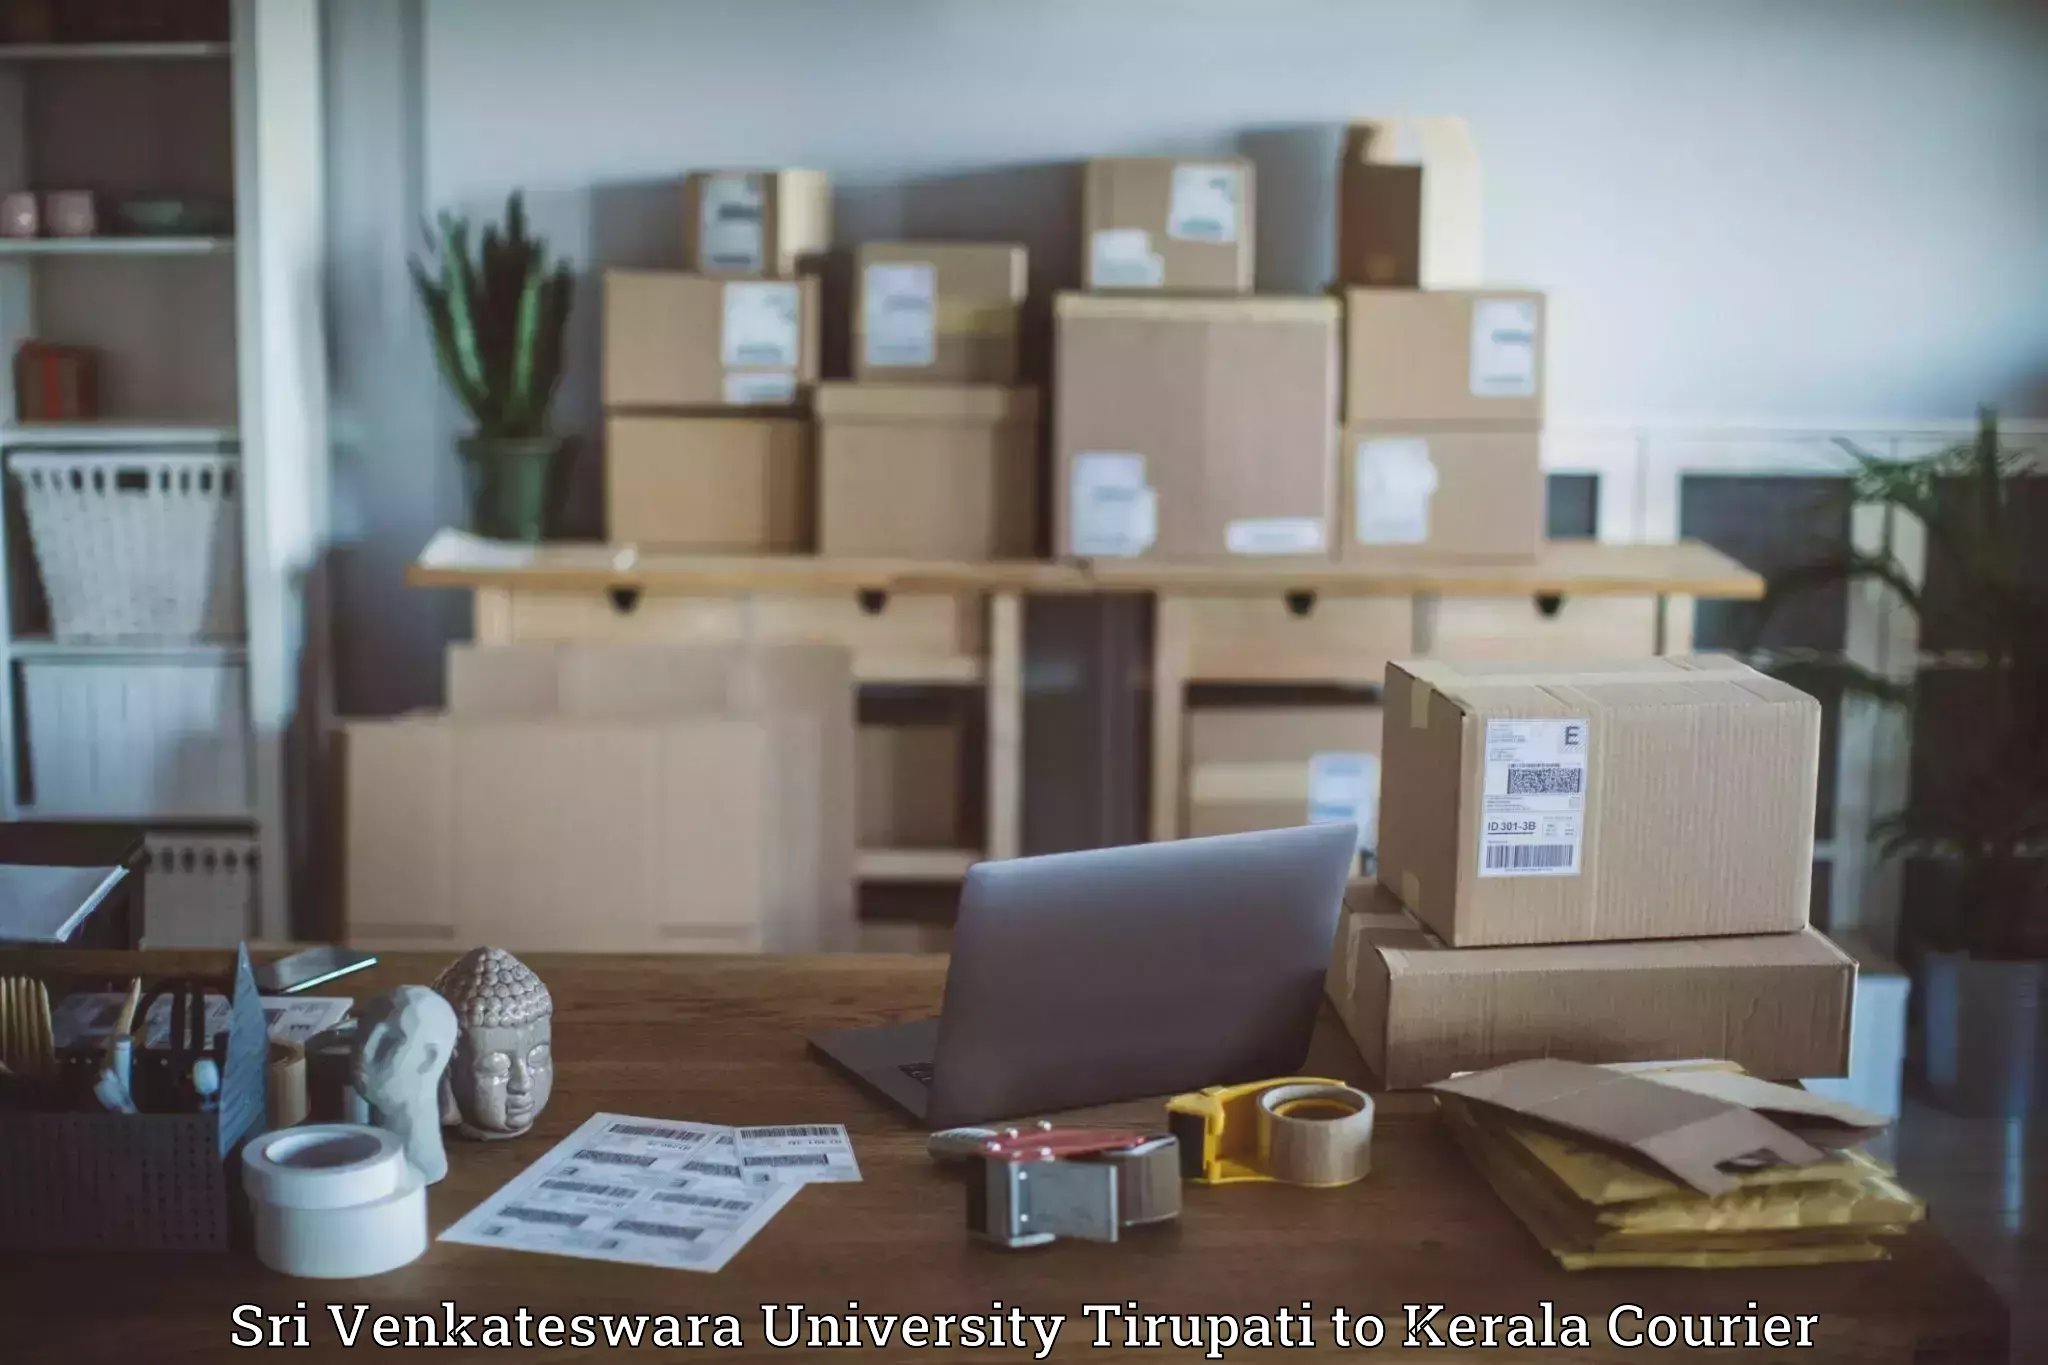 Courier service comparison in Sri Venkateswara University Tirupati to Kerala